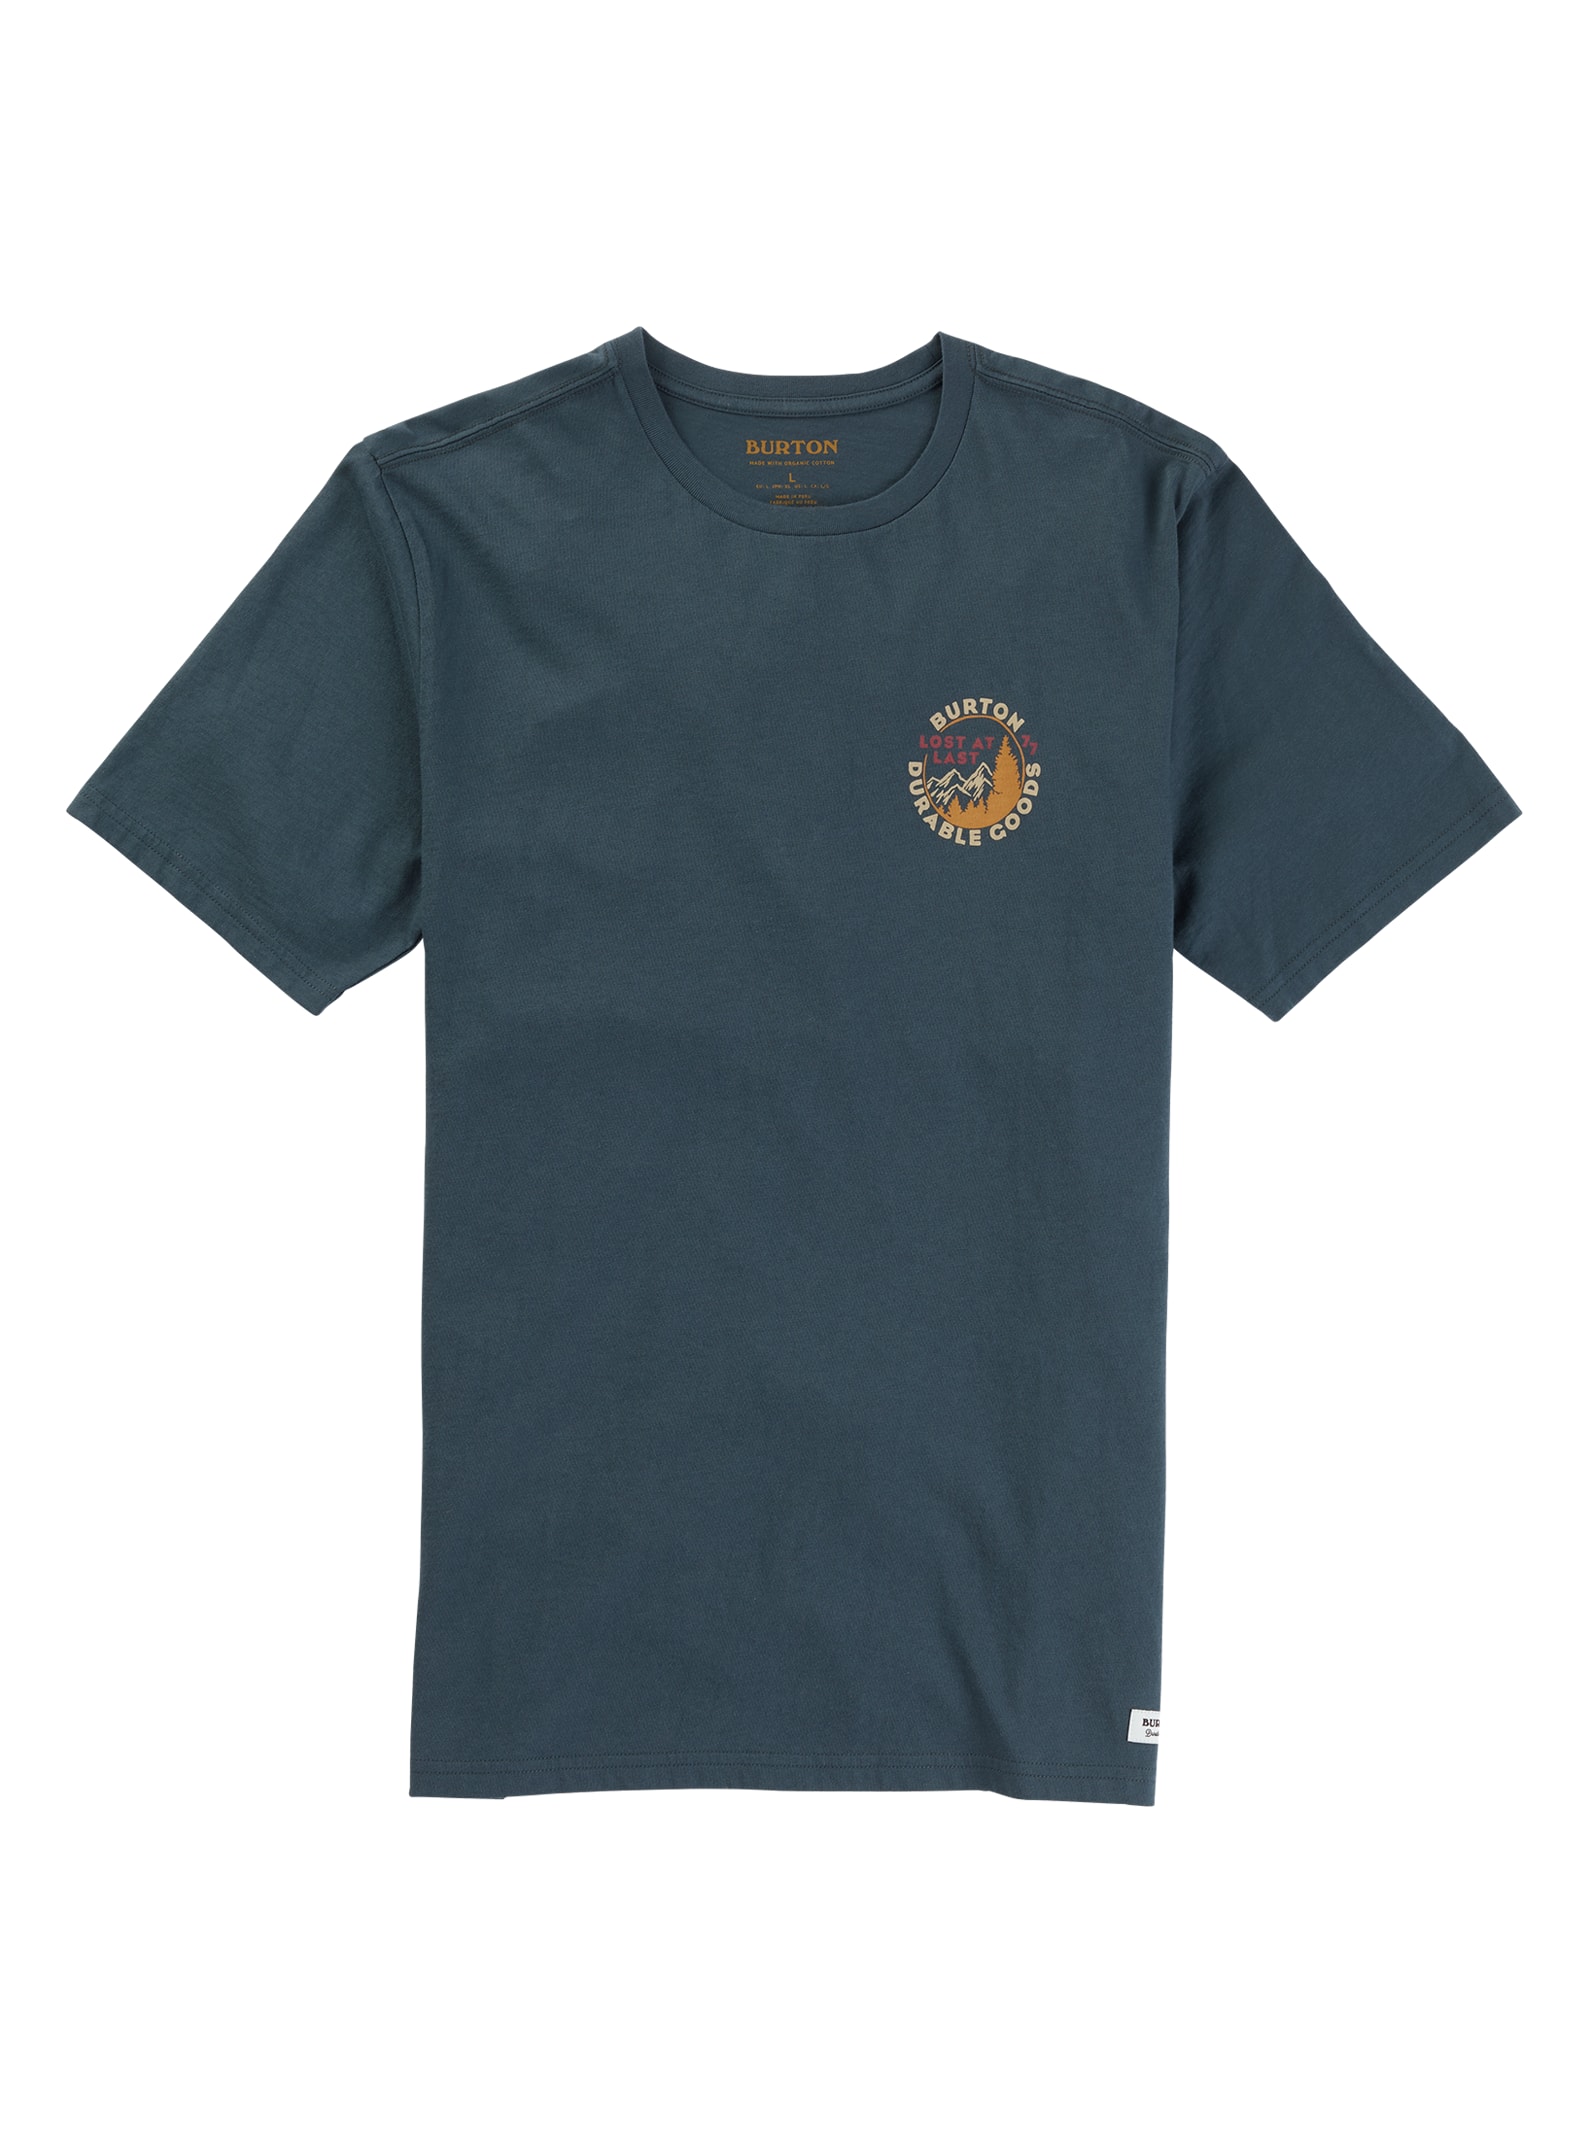 Burton - T-shirt à manches courtes Mill Pond homme, Dark Slate, L